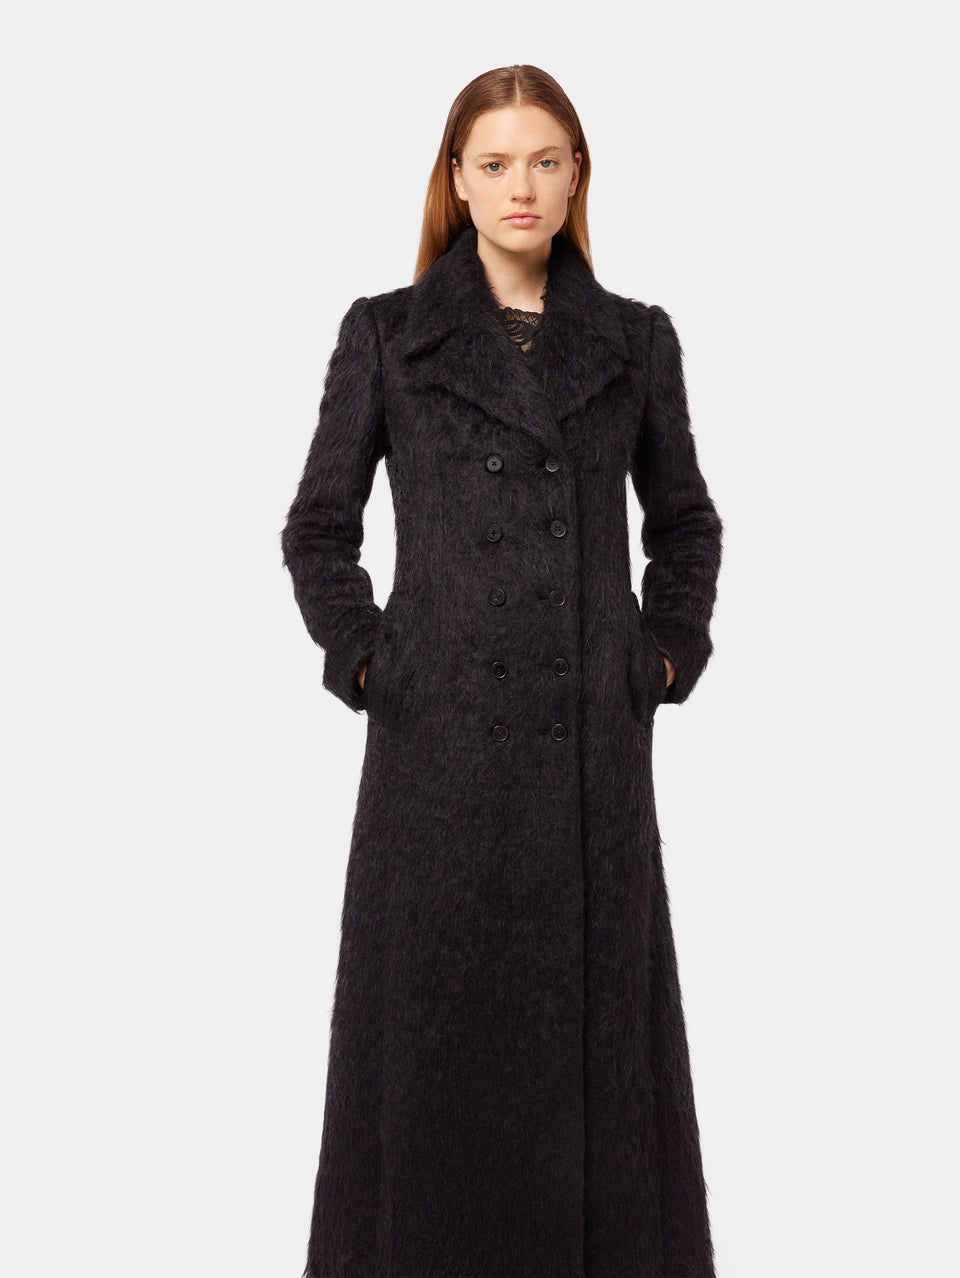 Long black coat